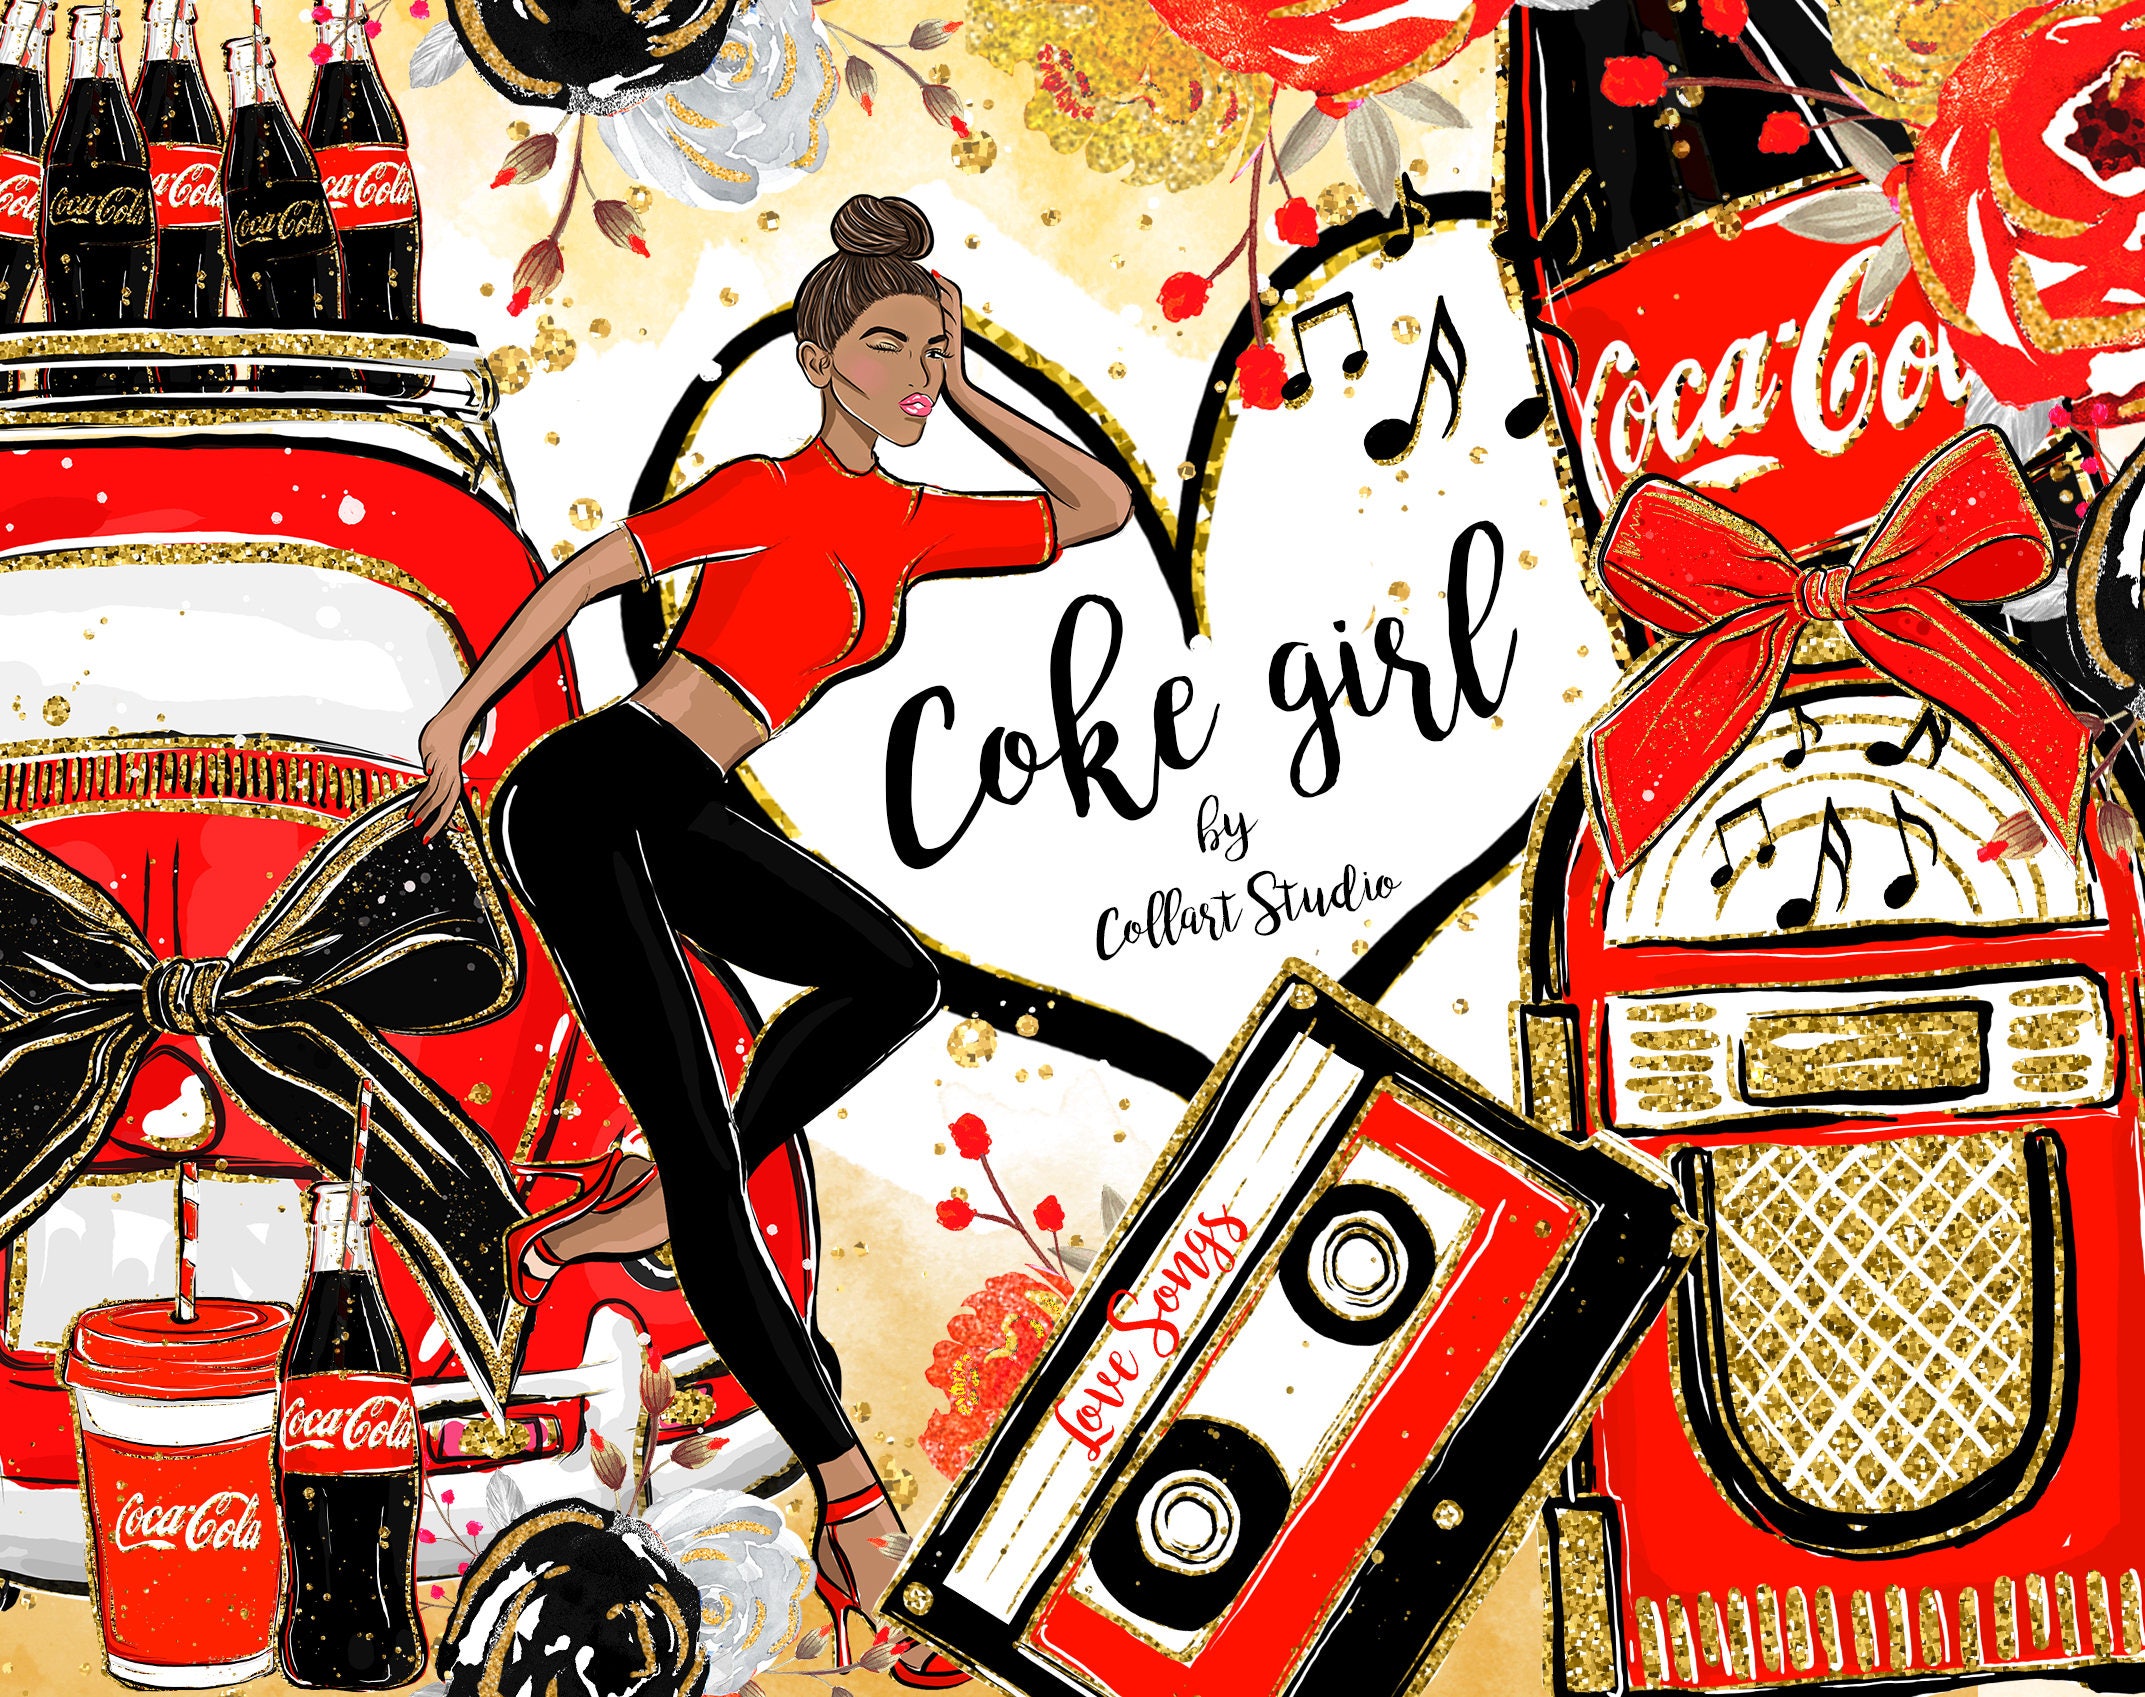 Pop реклама. Энди Уорхол картины Кока-кола. Энди Уорхолл Coca Cola. Энди Уорхол поп арт Кока кола. Картины Энди Уорхола Кока кола.